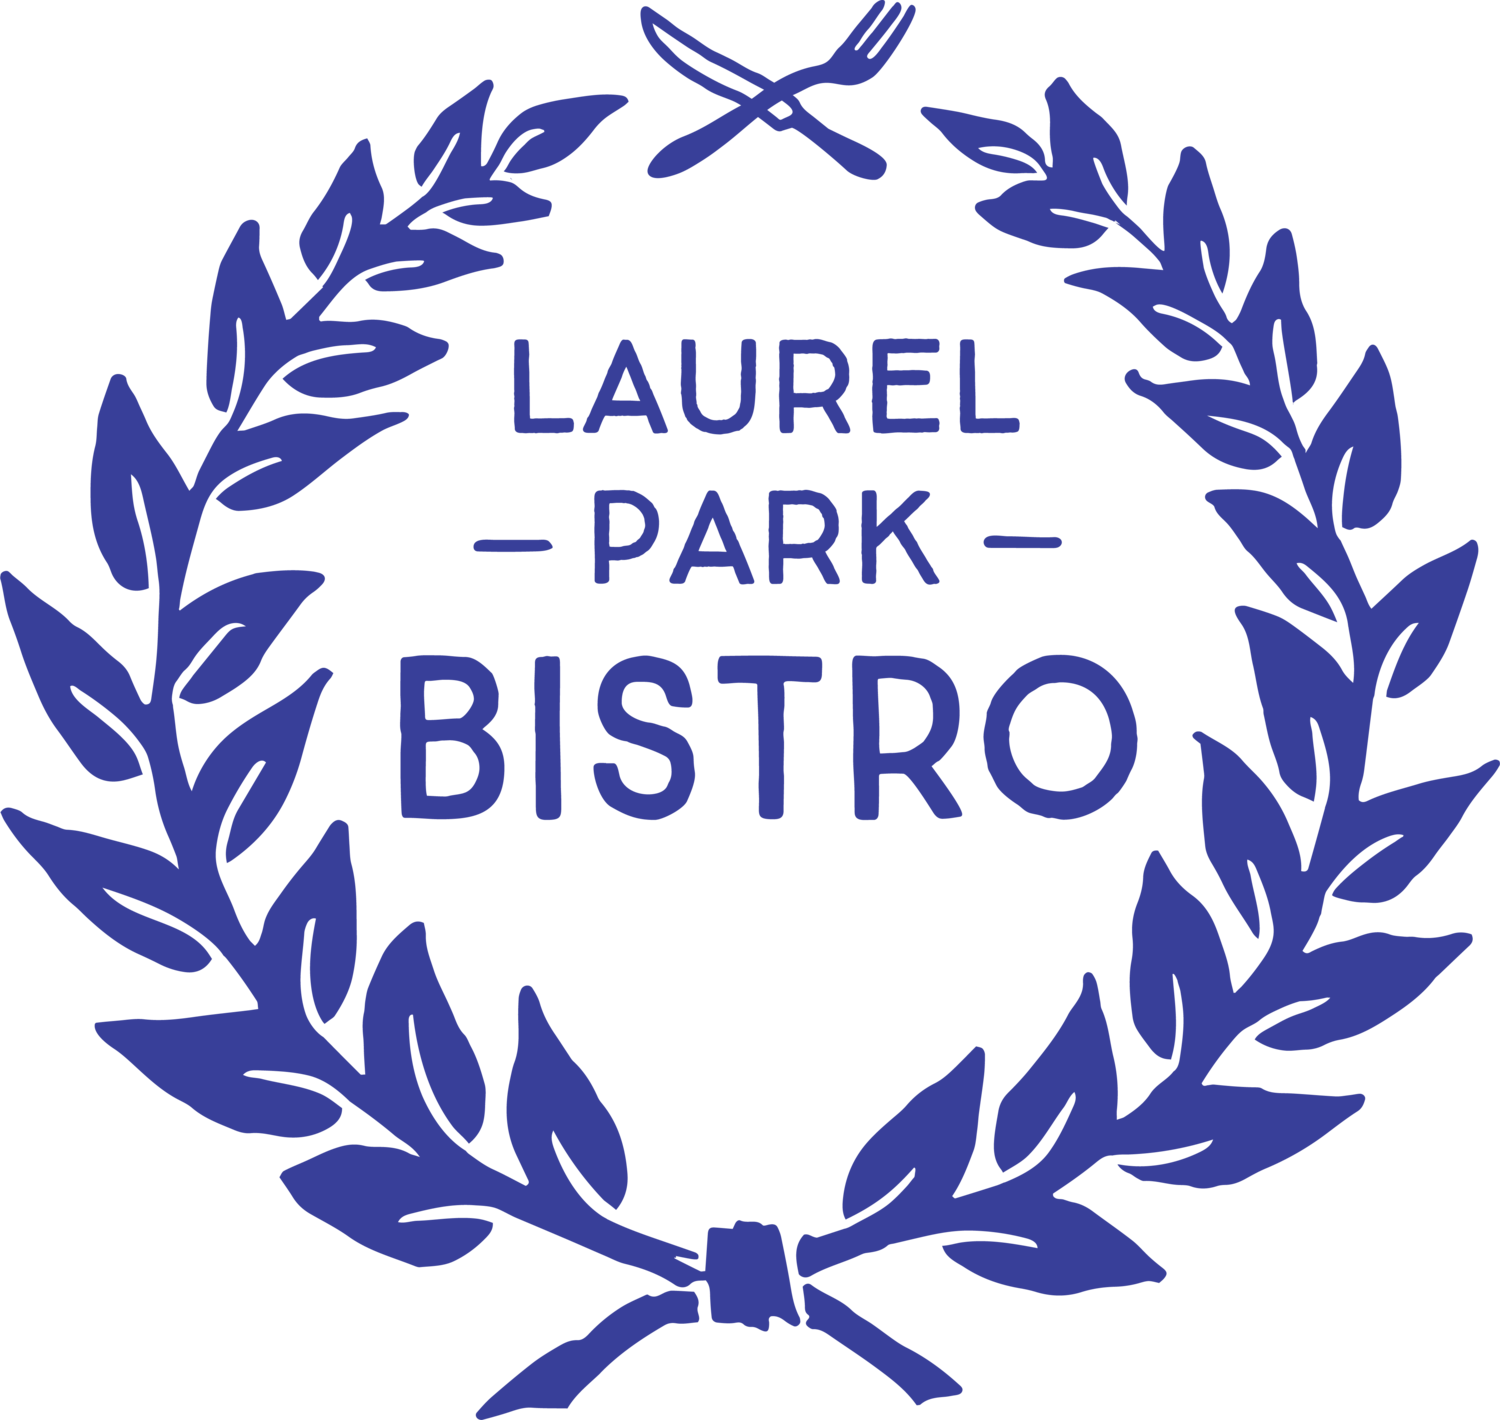 Laurel Park Bistro